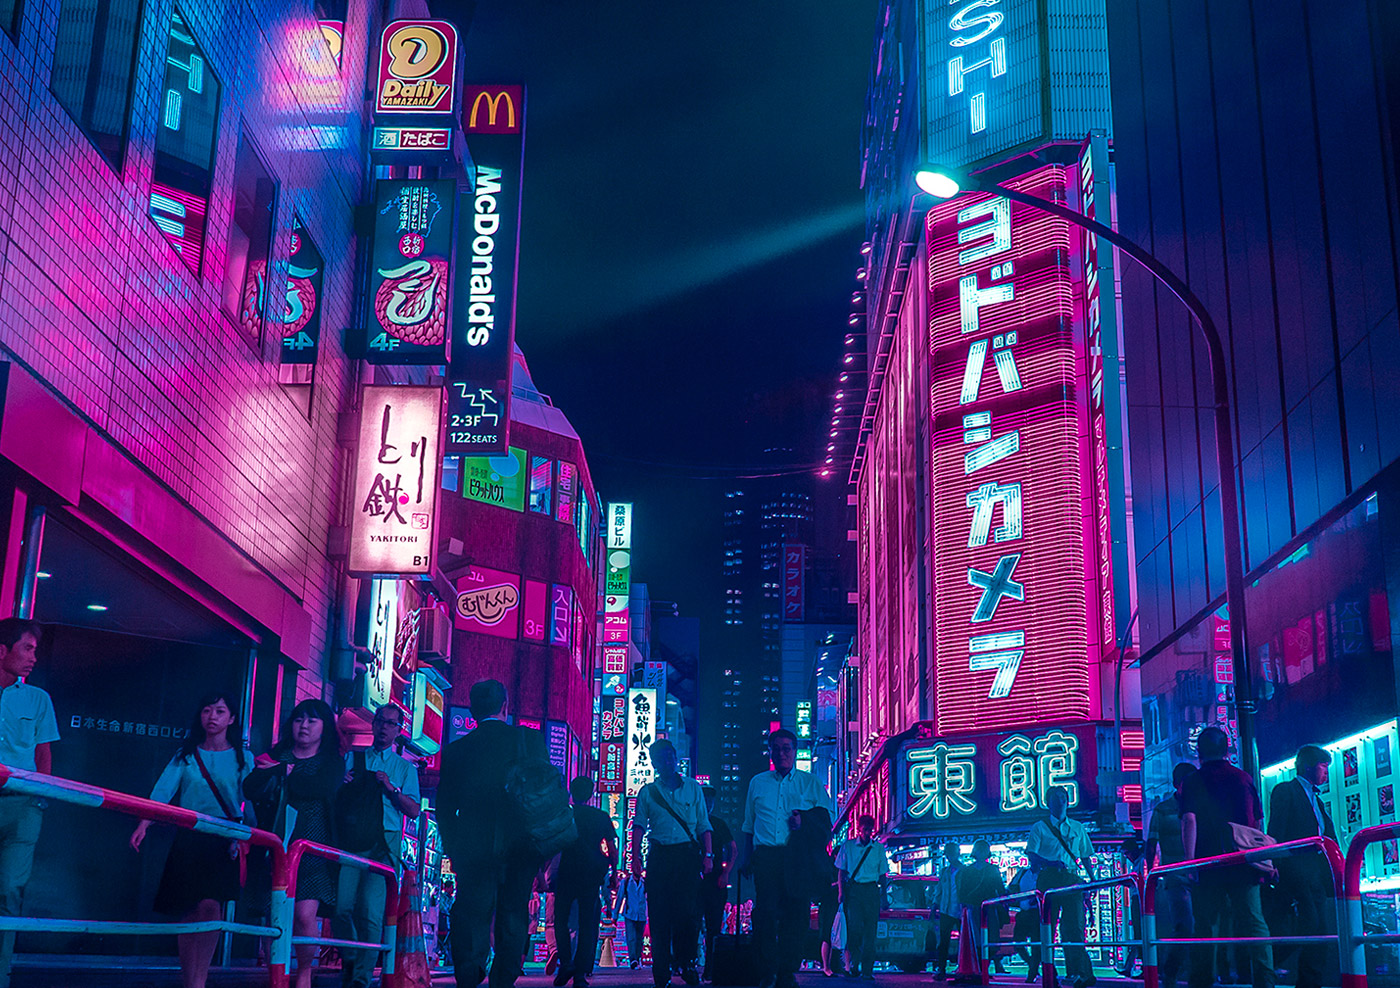 Japan Night 4K Desktop Wallpaper  Cody Ellingham Photographic Artist